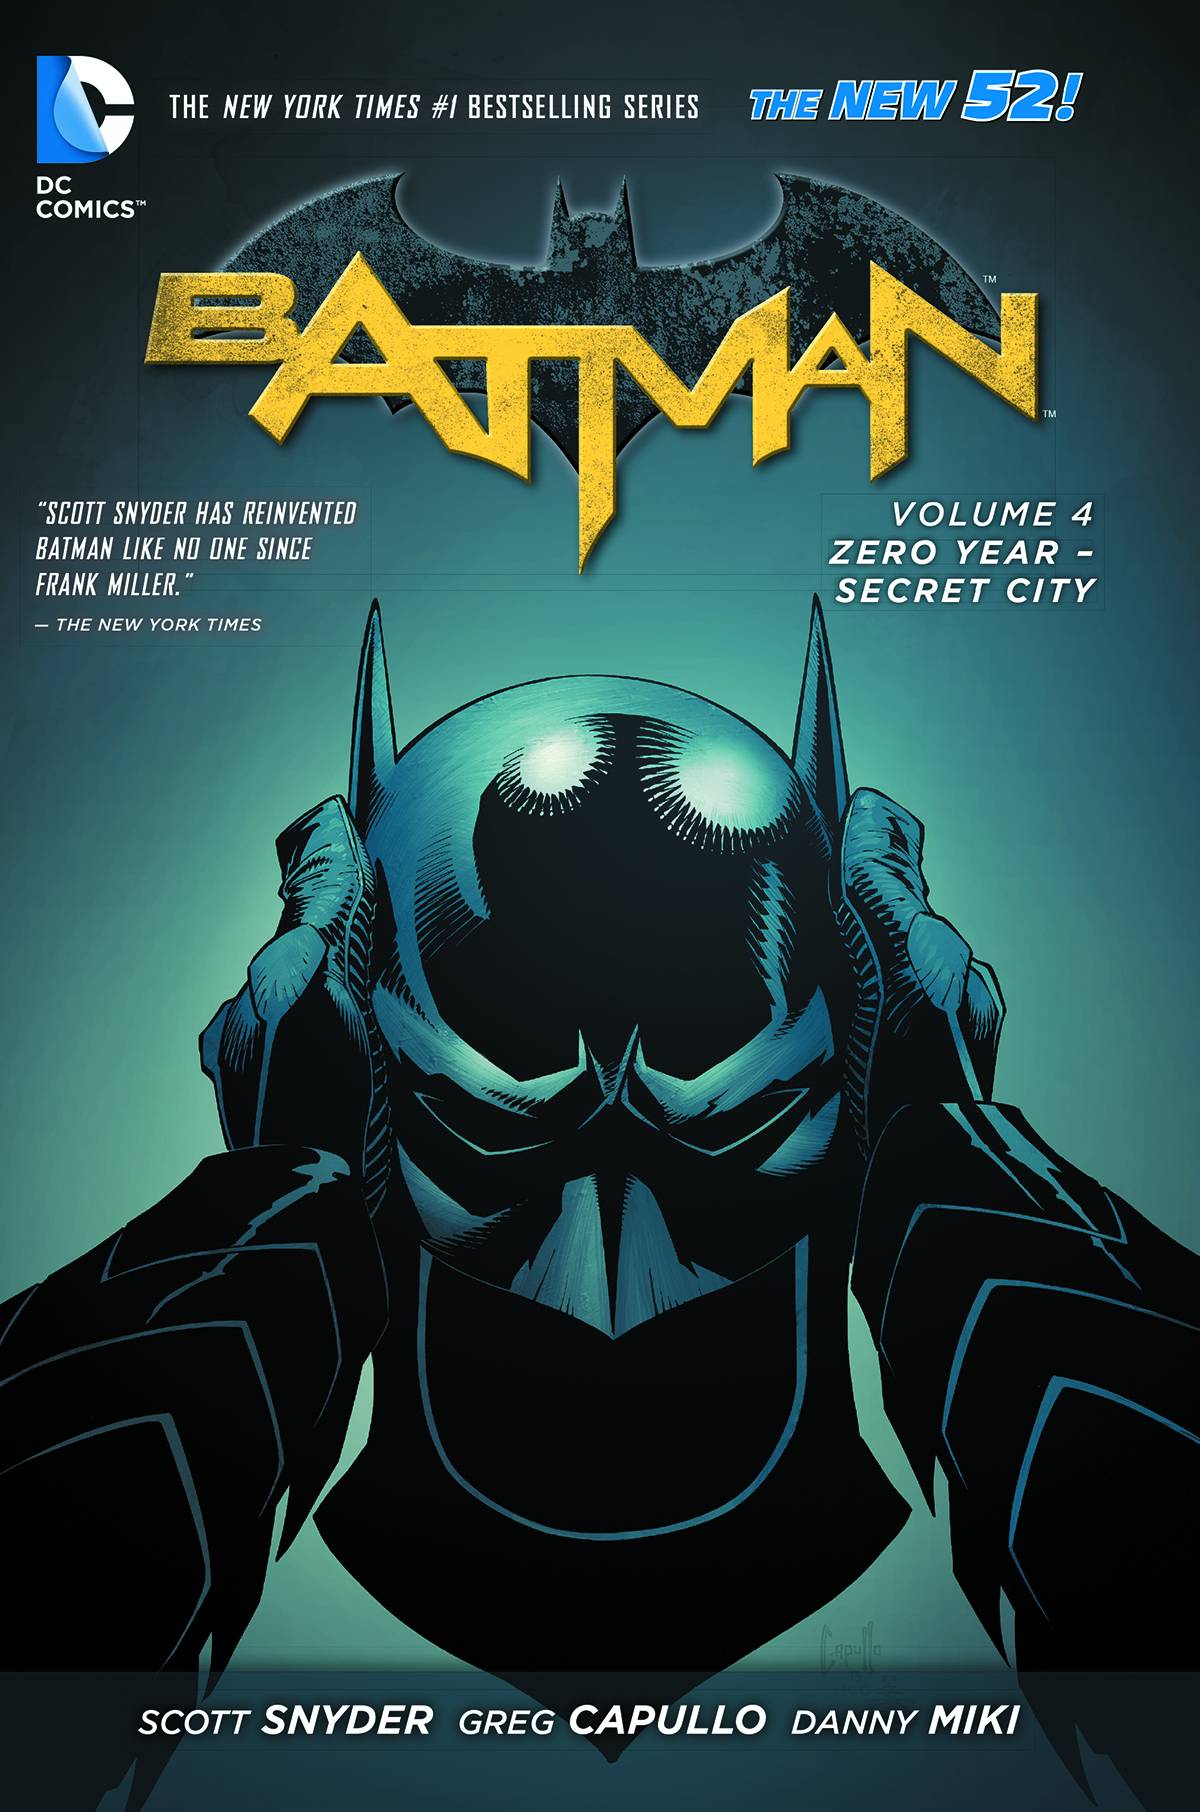 BATMAN (New 52) VOL 04: ZERO YEAR/SECRET CITY